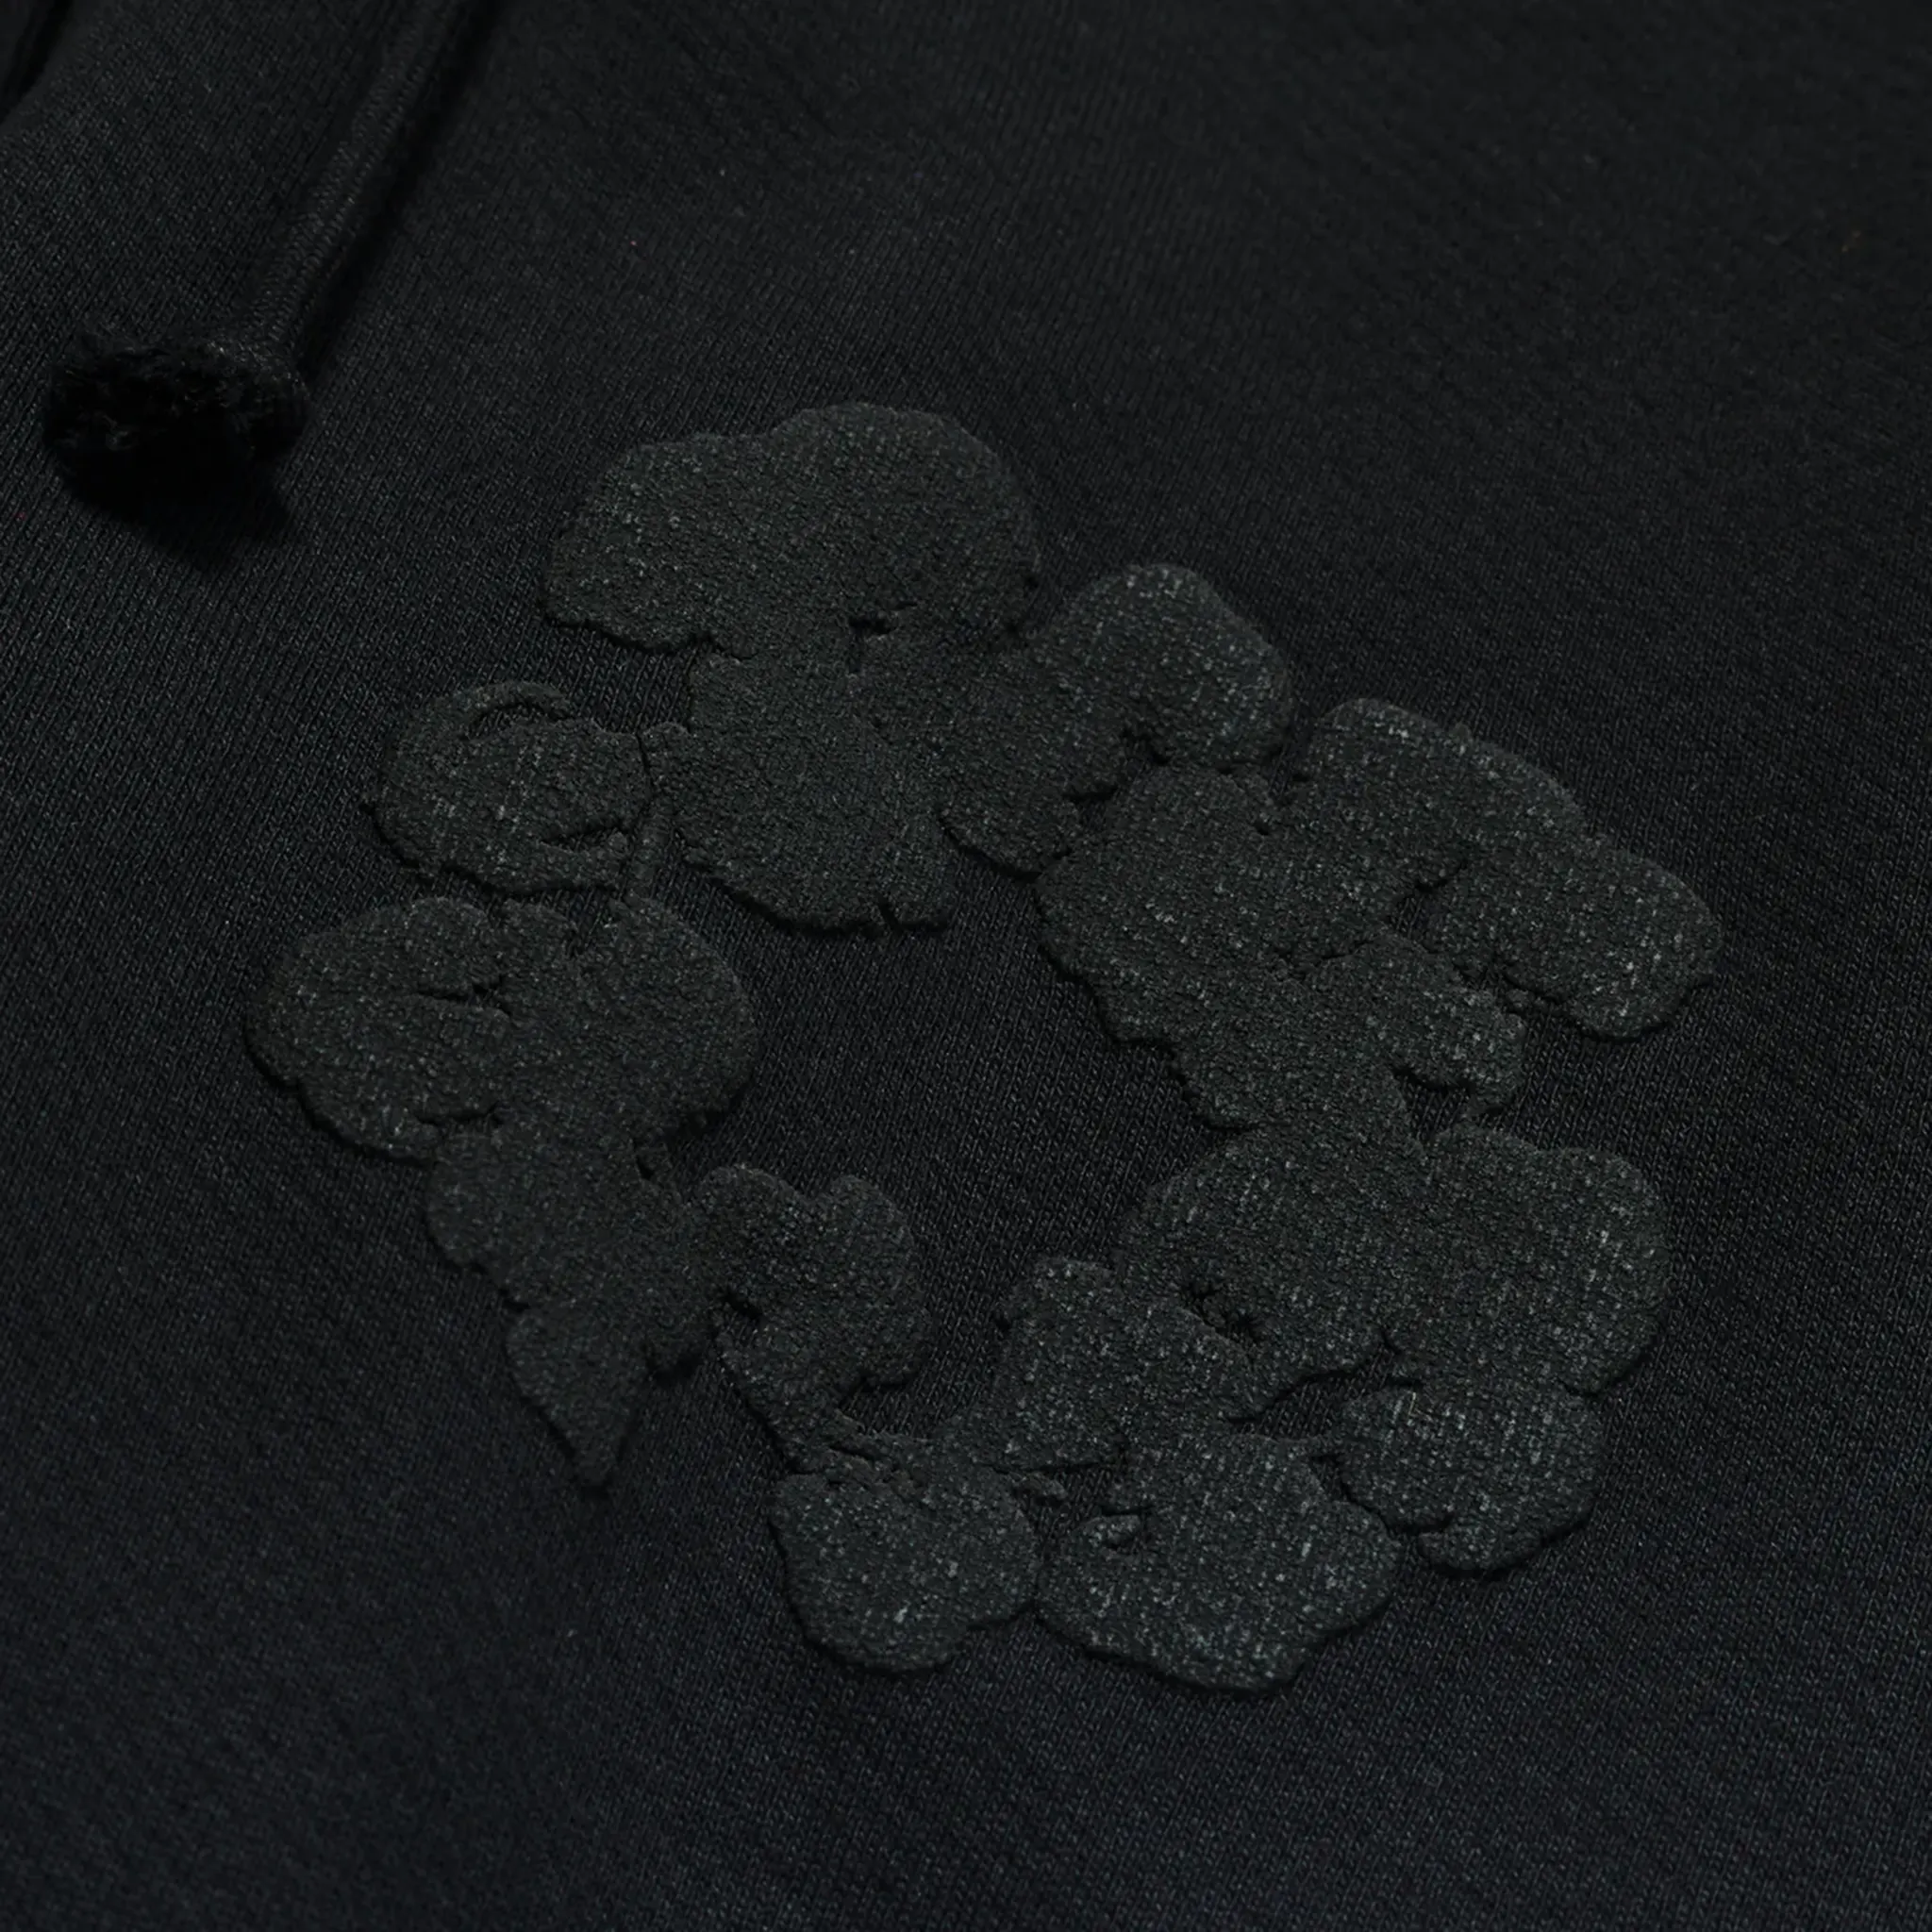 Detail view of Denim Tears Cotton Wreath Black Monochrome Sweatpants 5650 1SS240204CWSP BLAC